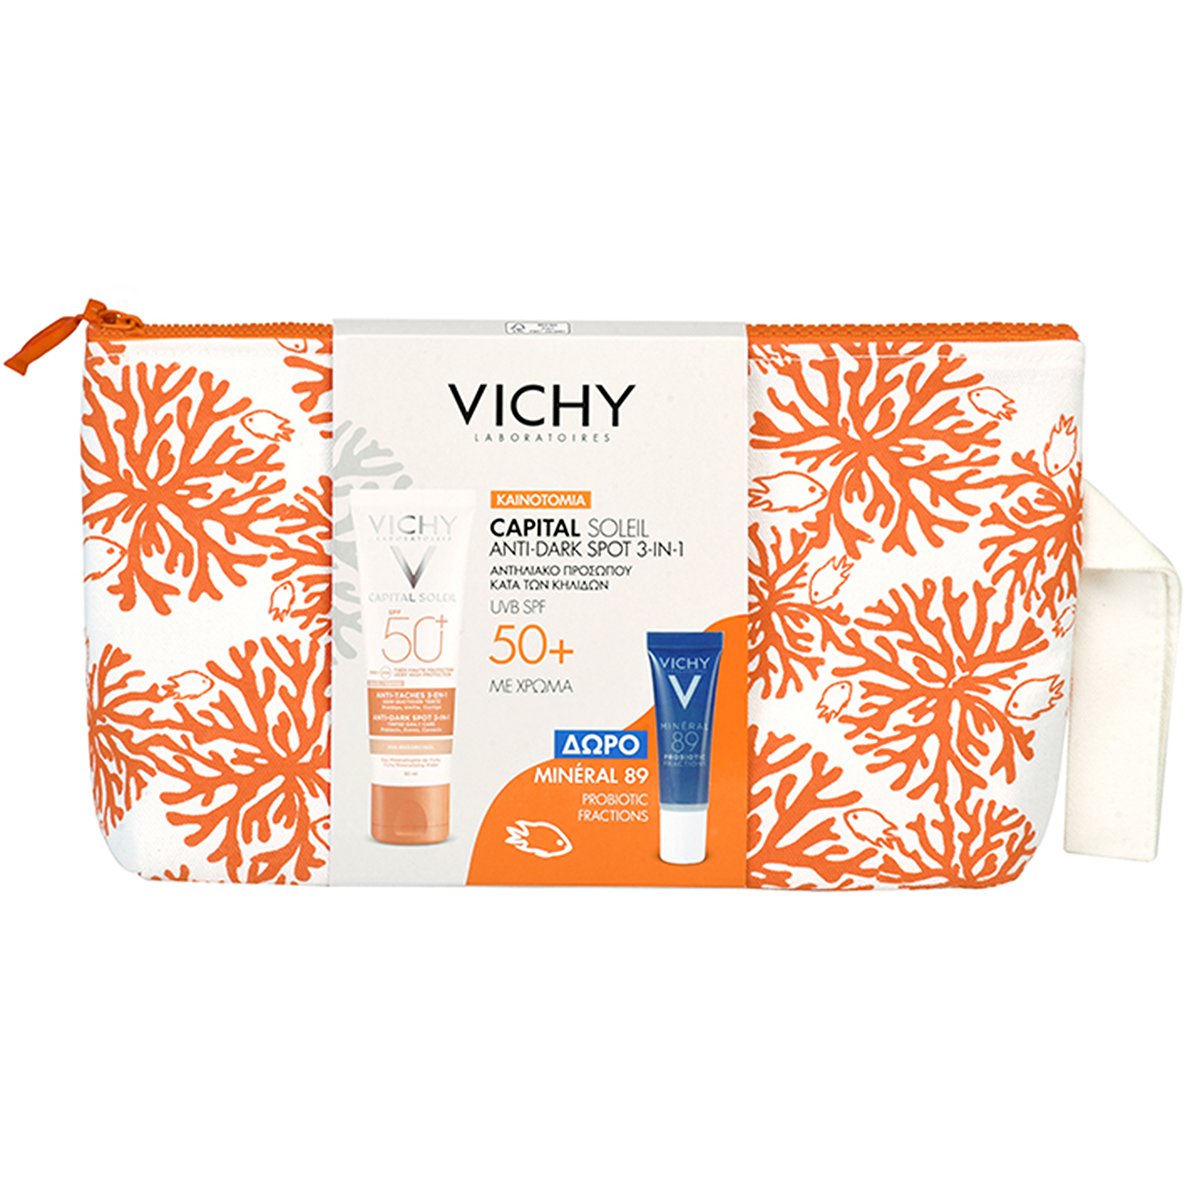 Vichy Capital Soleil Promo Cream 3-in-1 Tinted Anti Dark Spots Spf50+,50ml & Δώρο Mineral 89 Probiotic Fractions 10ml